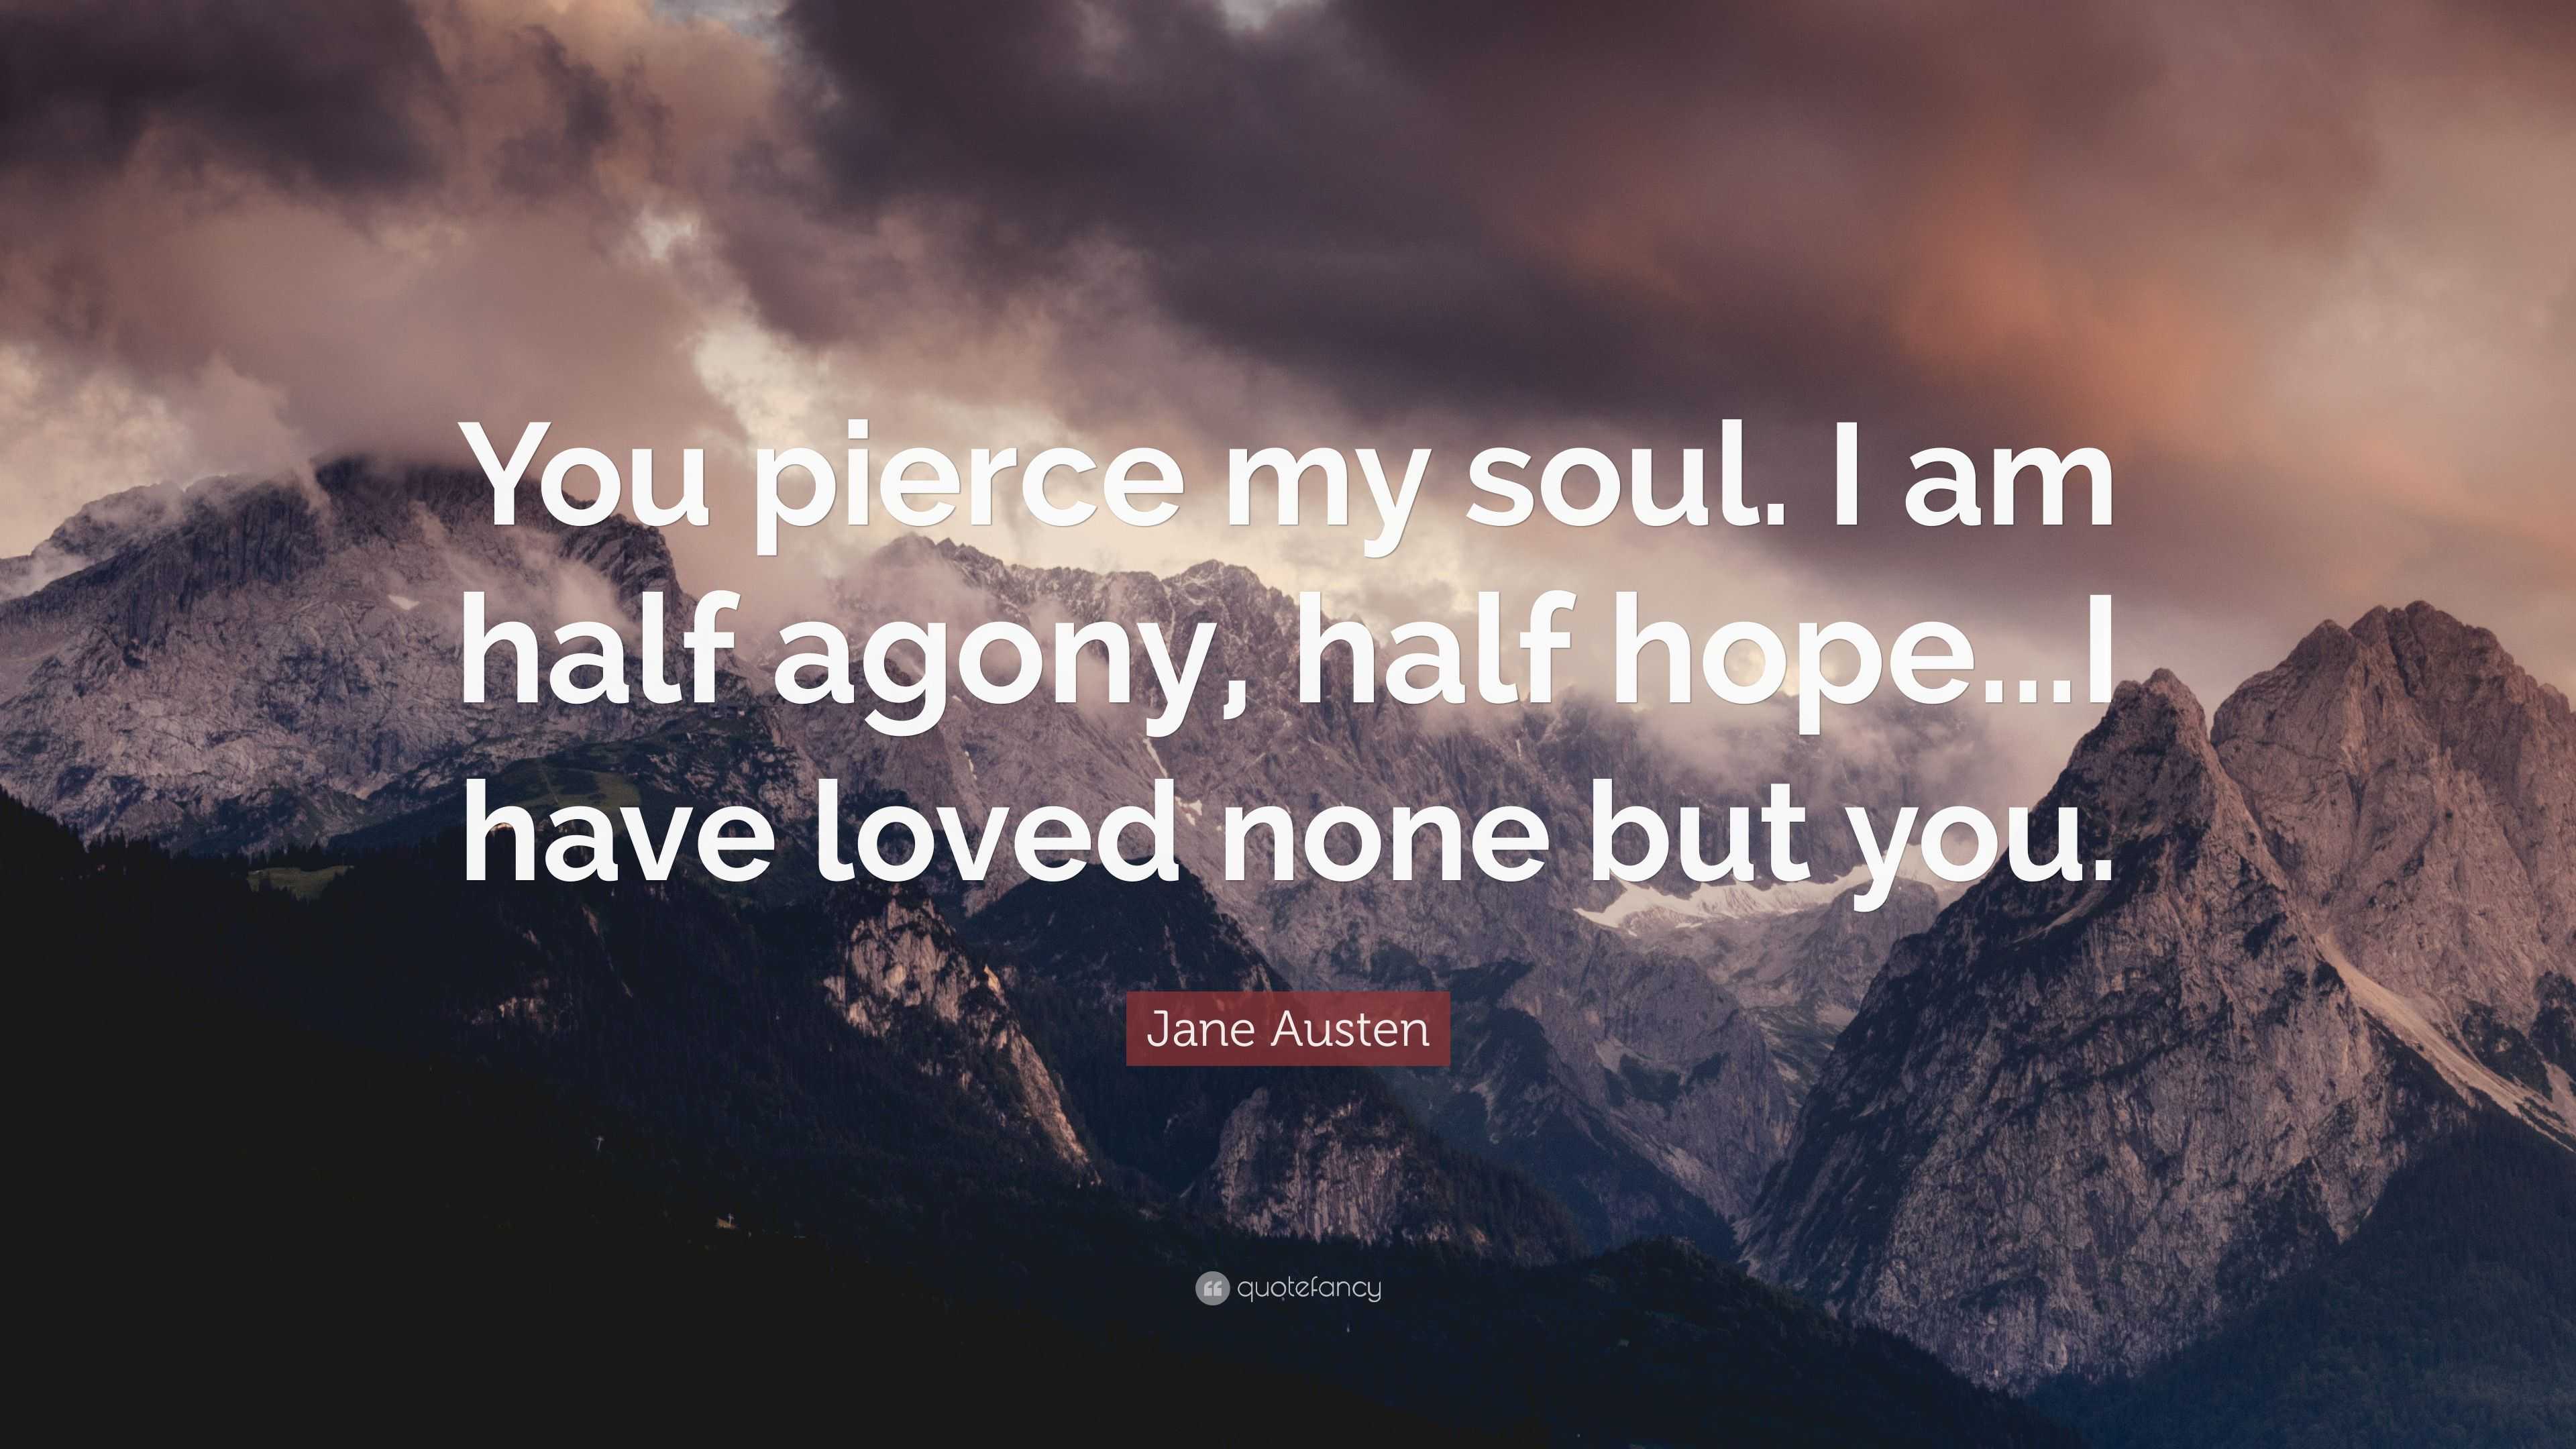 Jane Austen Quote: “You pierce my soul. I am half agony, half hope...I ...